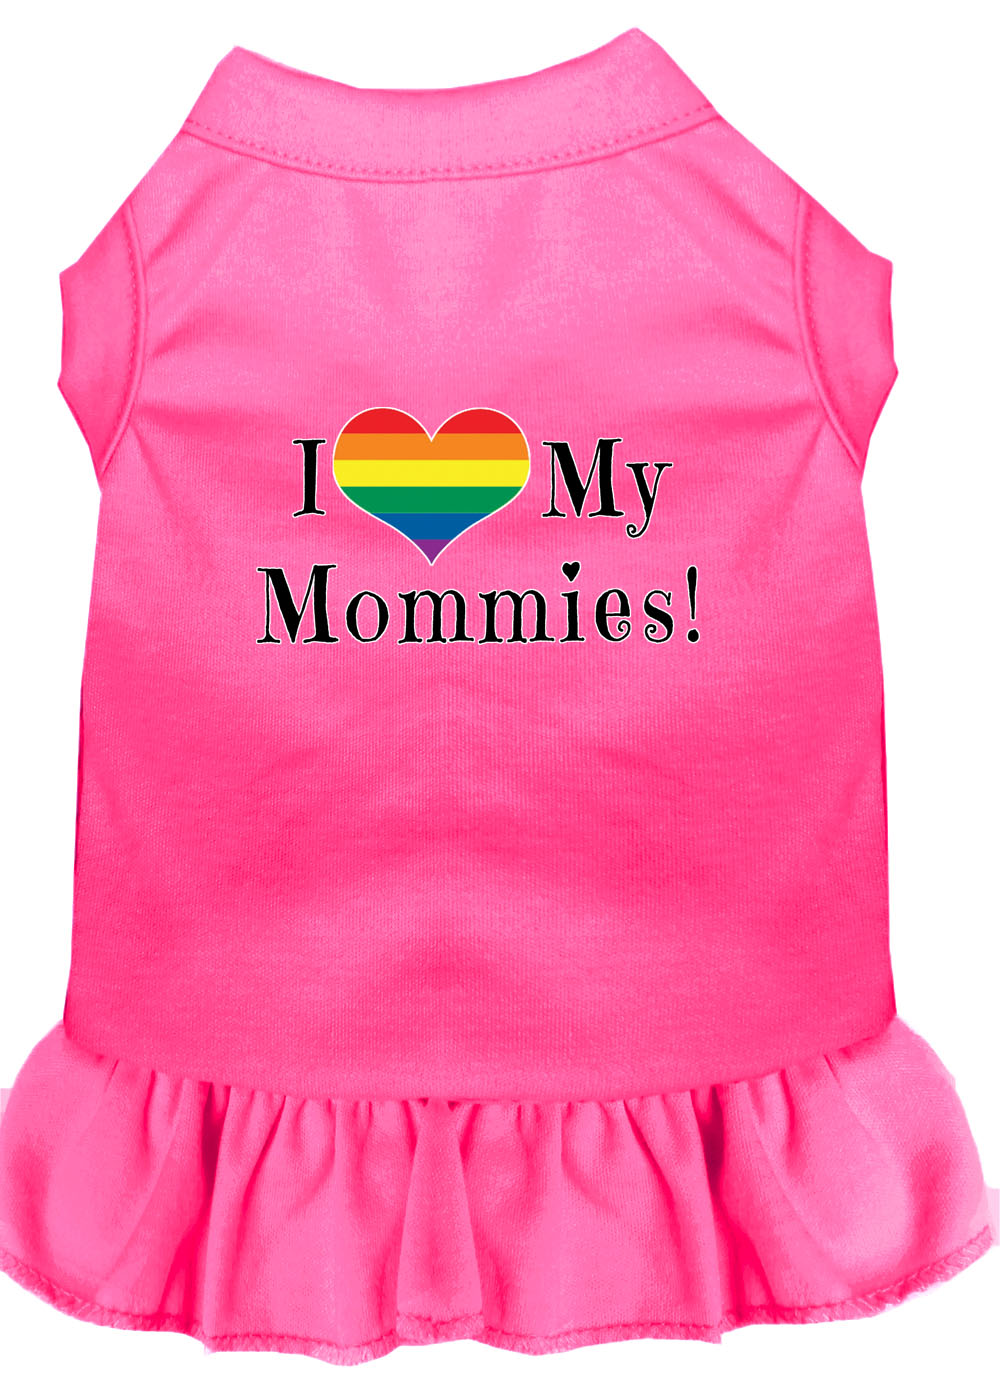 I Heart my Mommies Screen Print Dog Dress Bright Pink XL